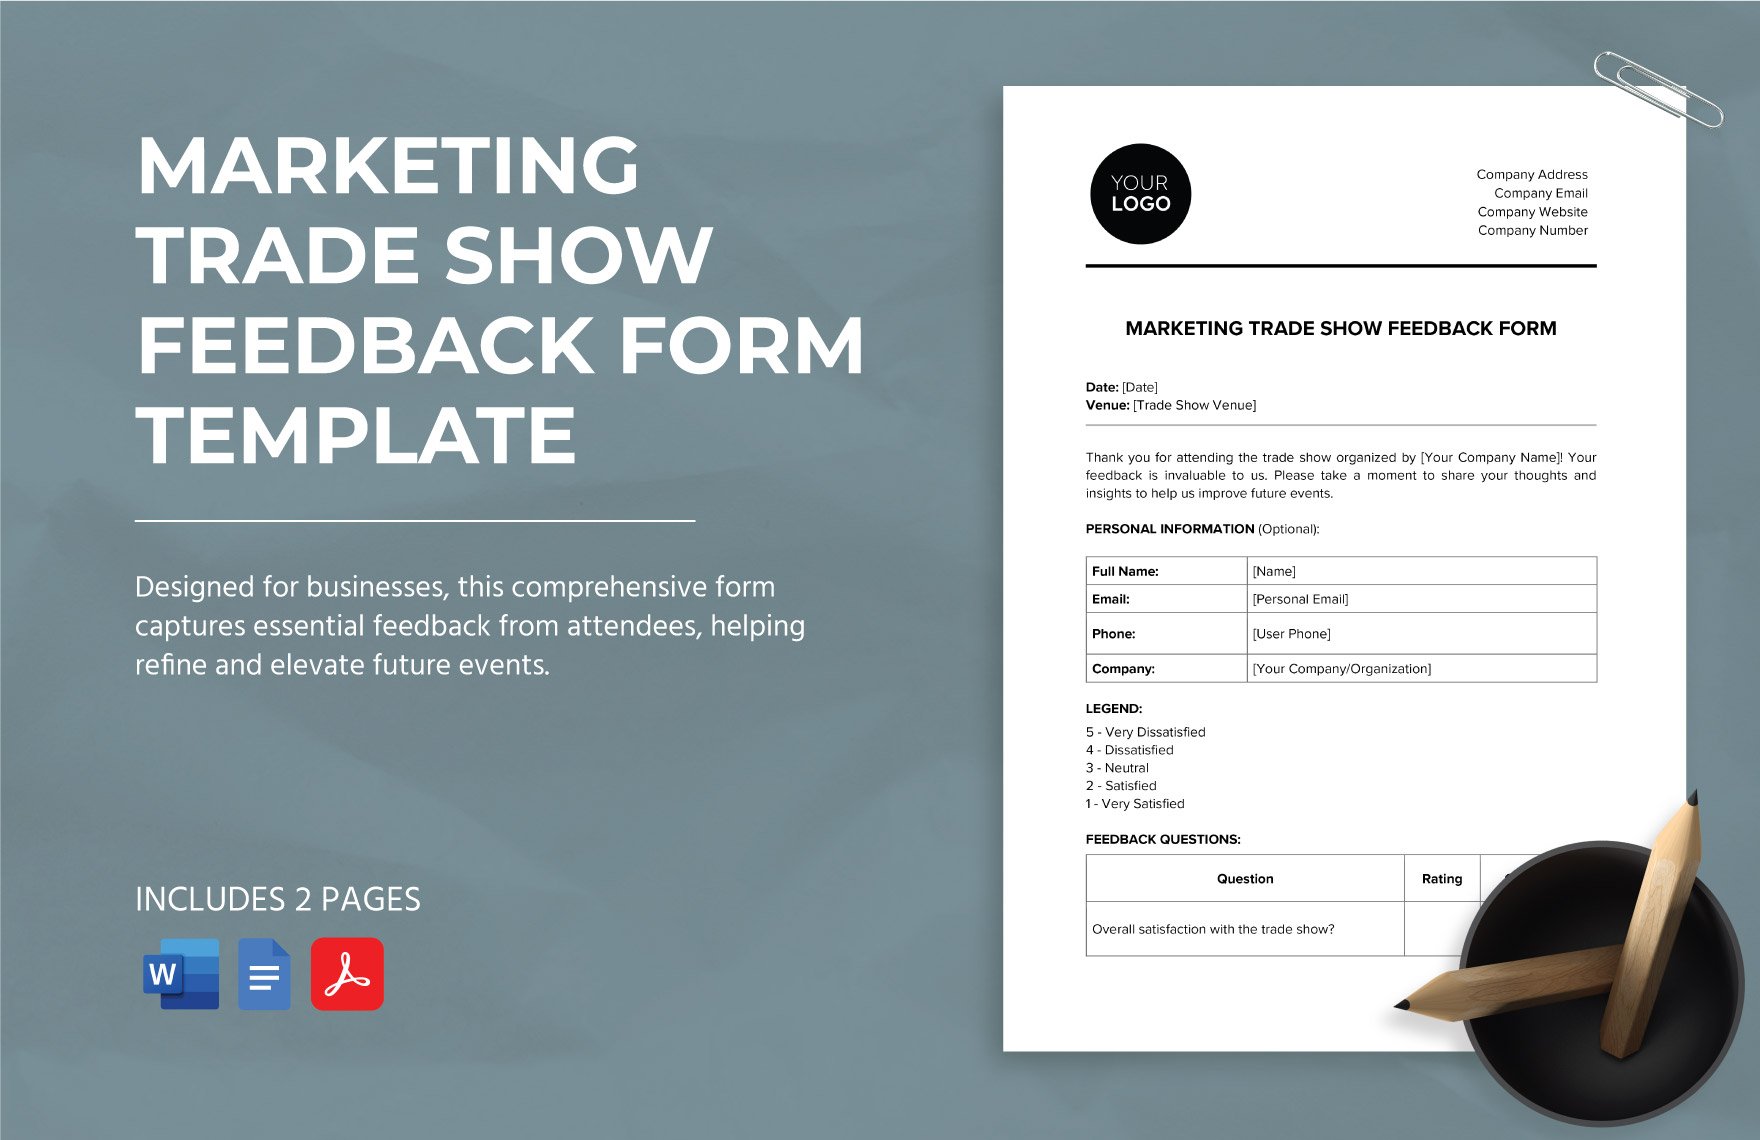 Marketing Trade Show Feedback Form Template in Word, Google Docs, PDF